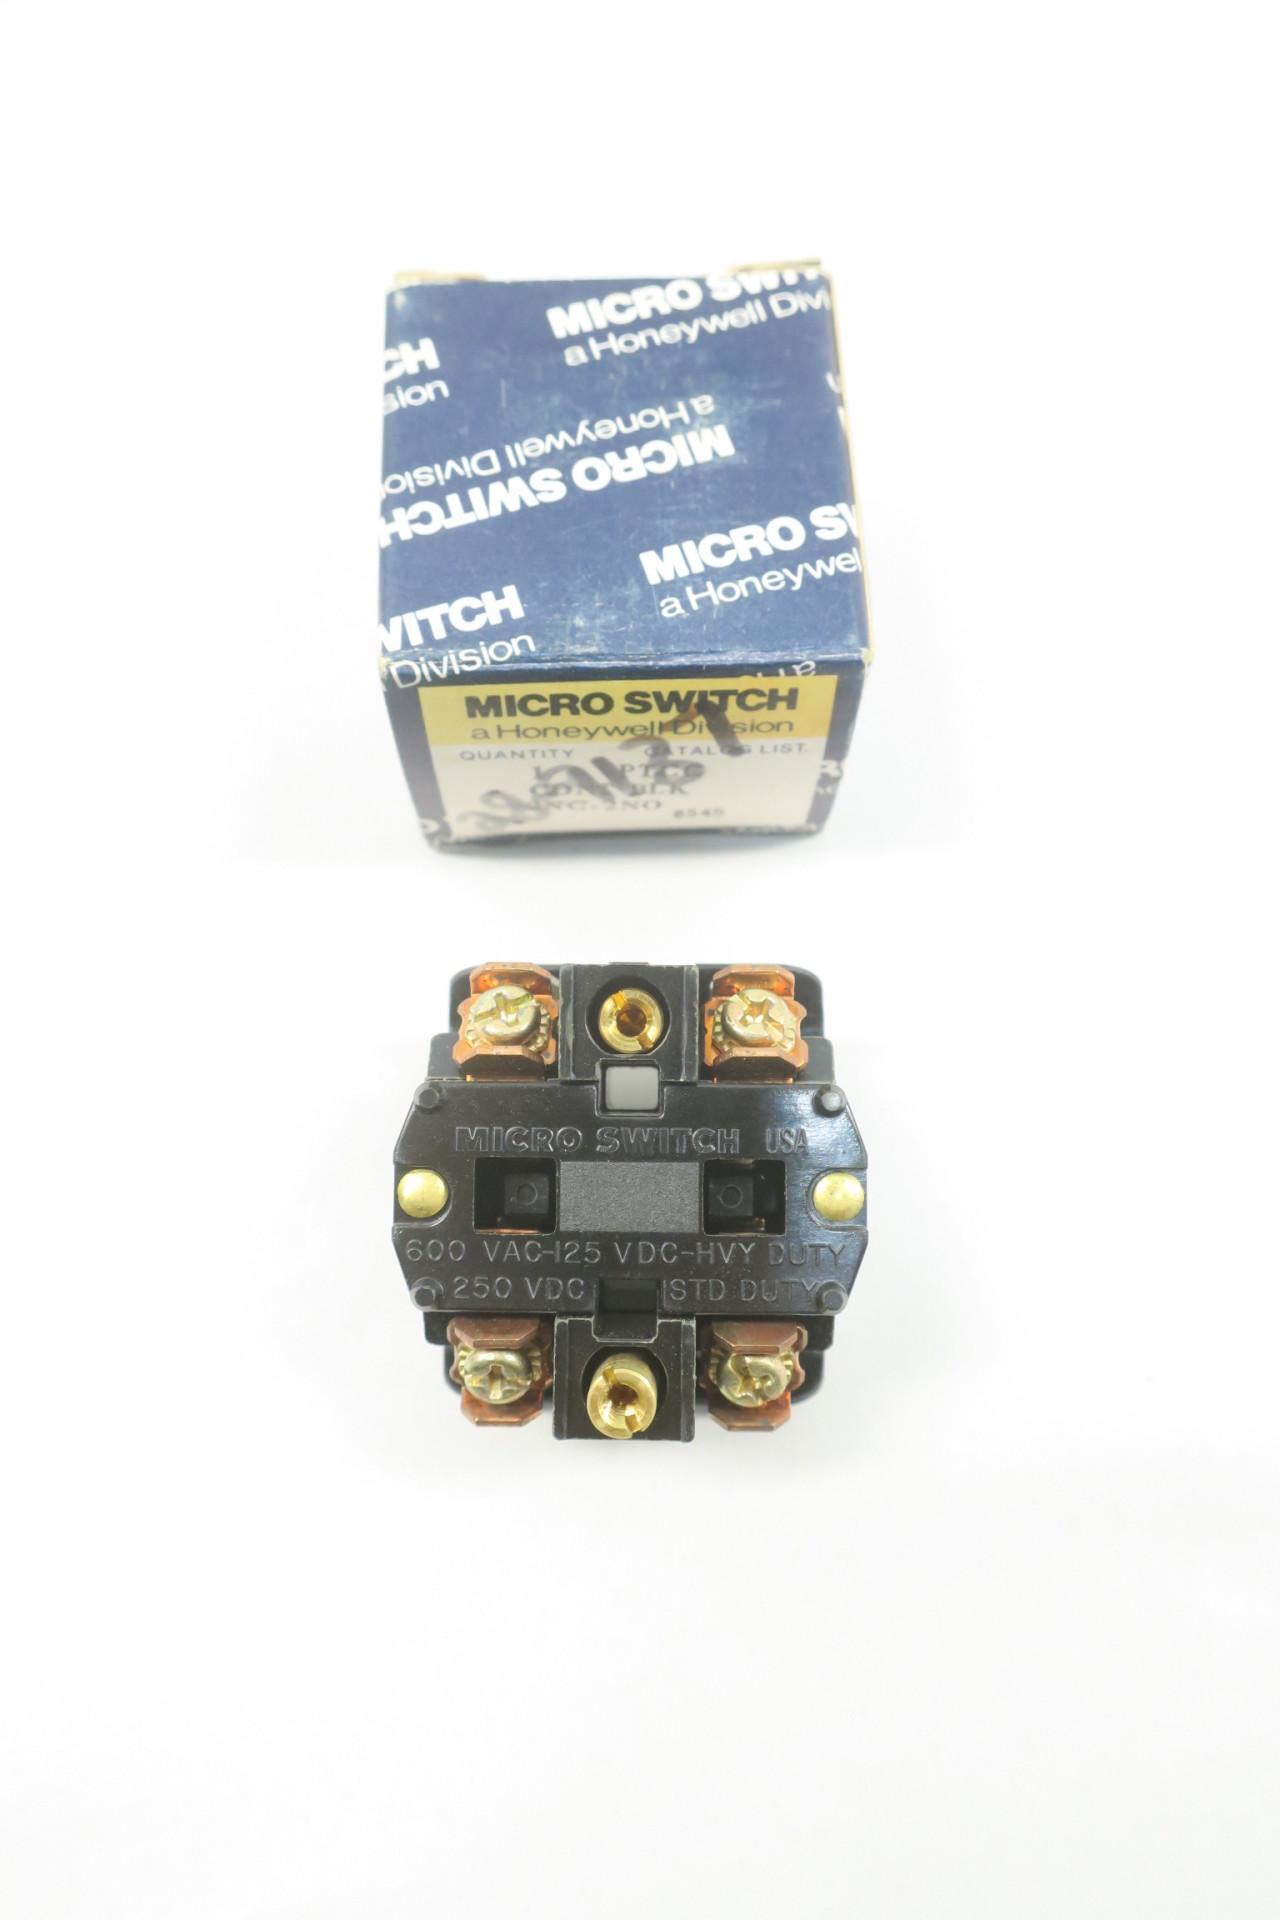 Micro Switch PTCC 600 VAC-125 VDC-HVY DUTY 250 VDC STD DUTY 